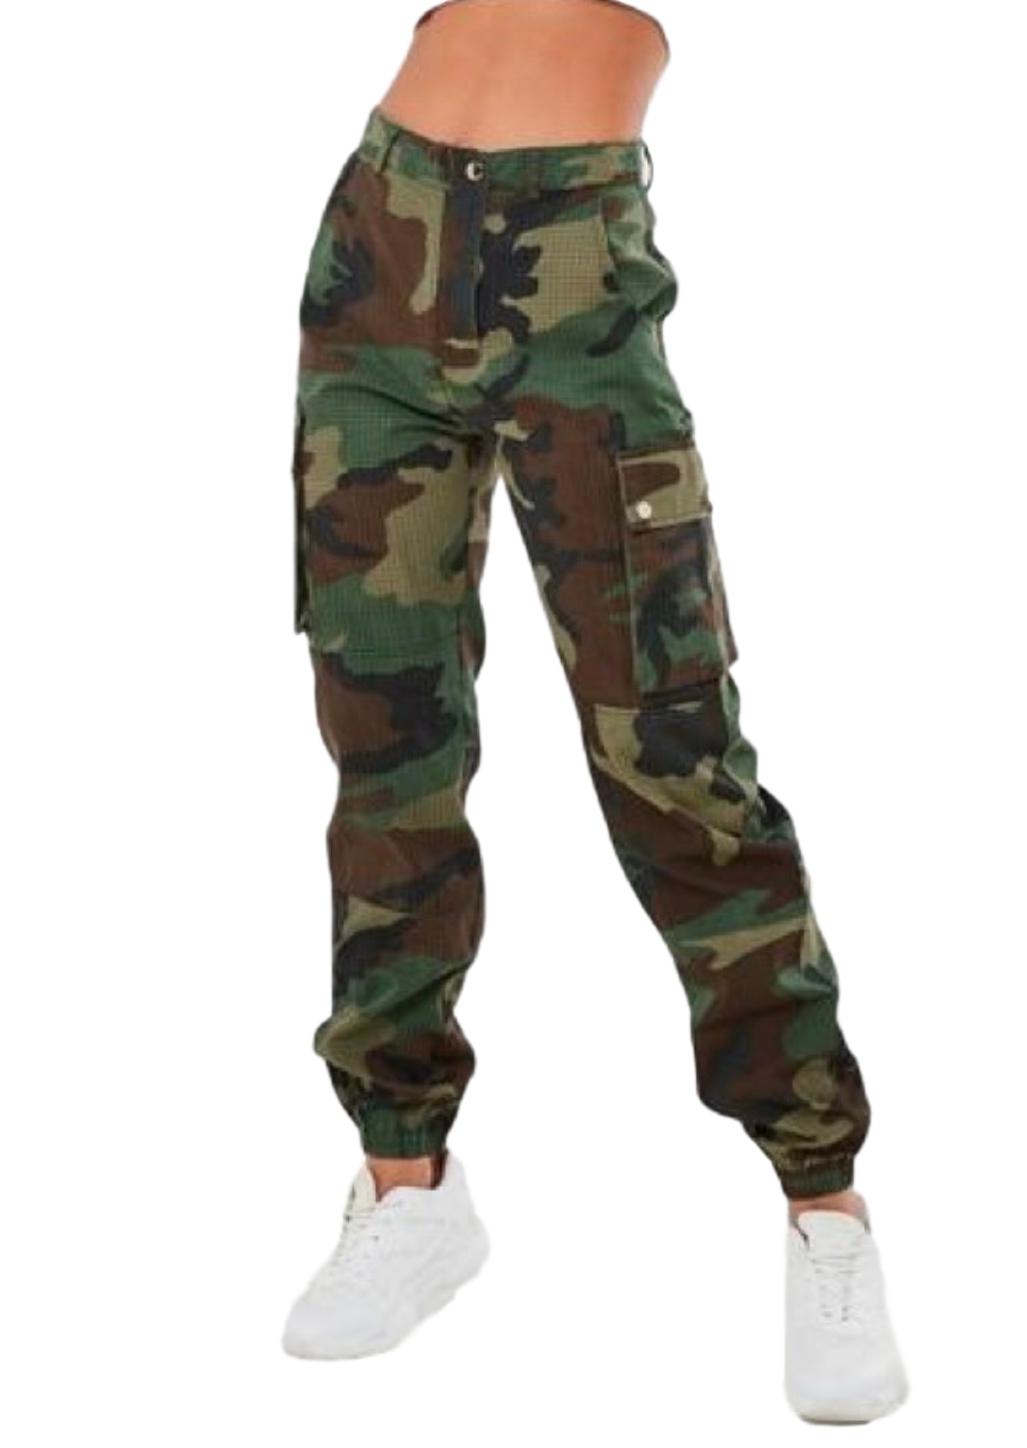 Camouflage Slim Cargo Pants Army Look Skinny Camo Combat Trousers | eBay